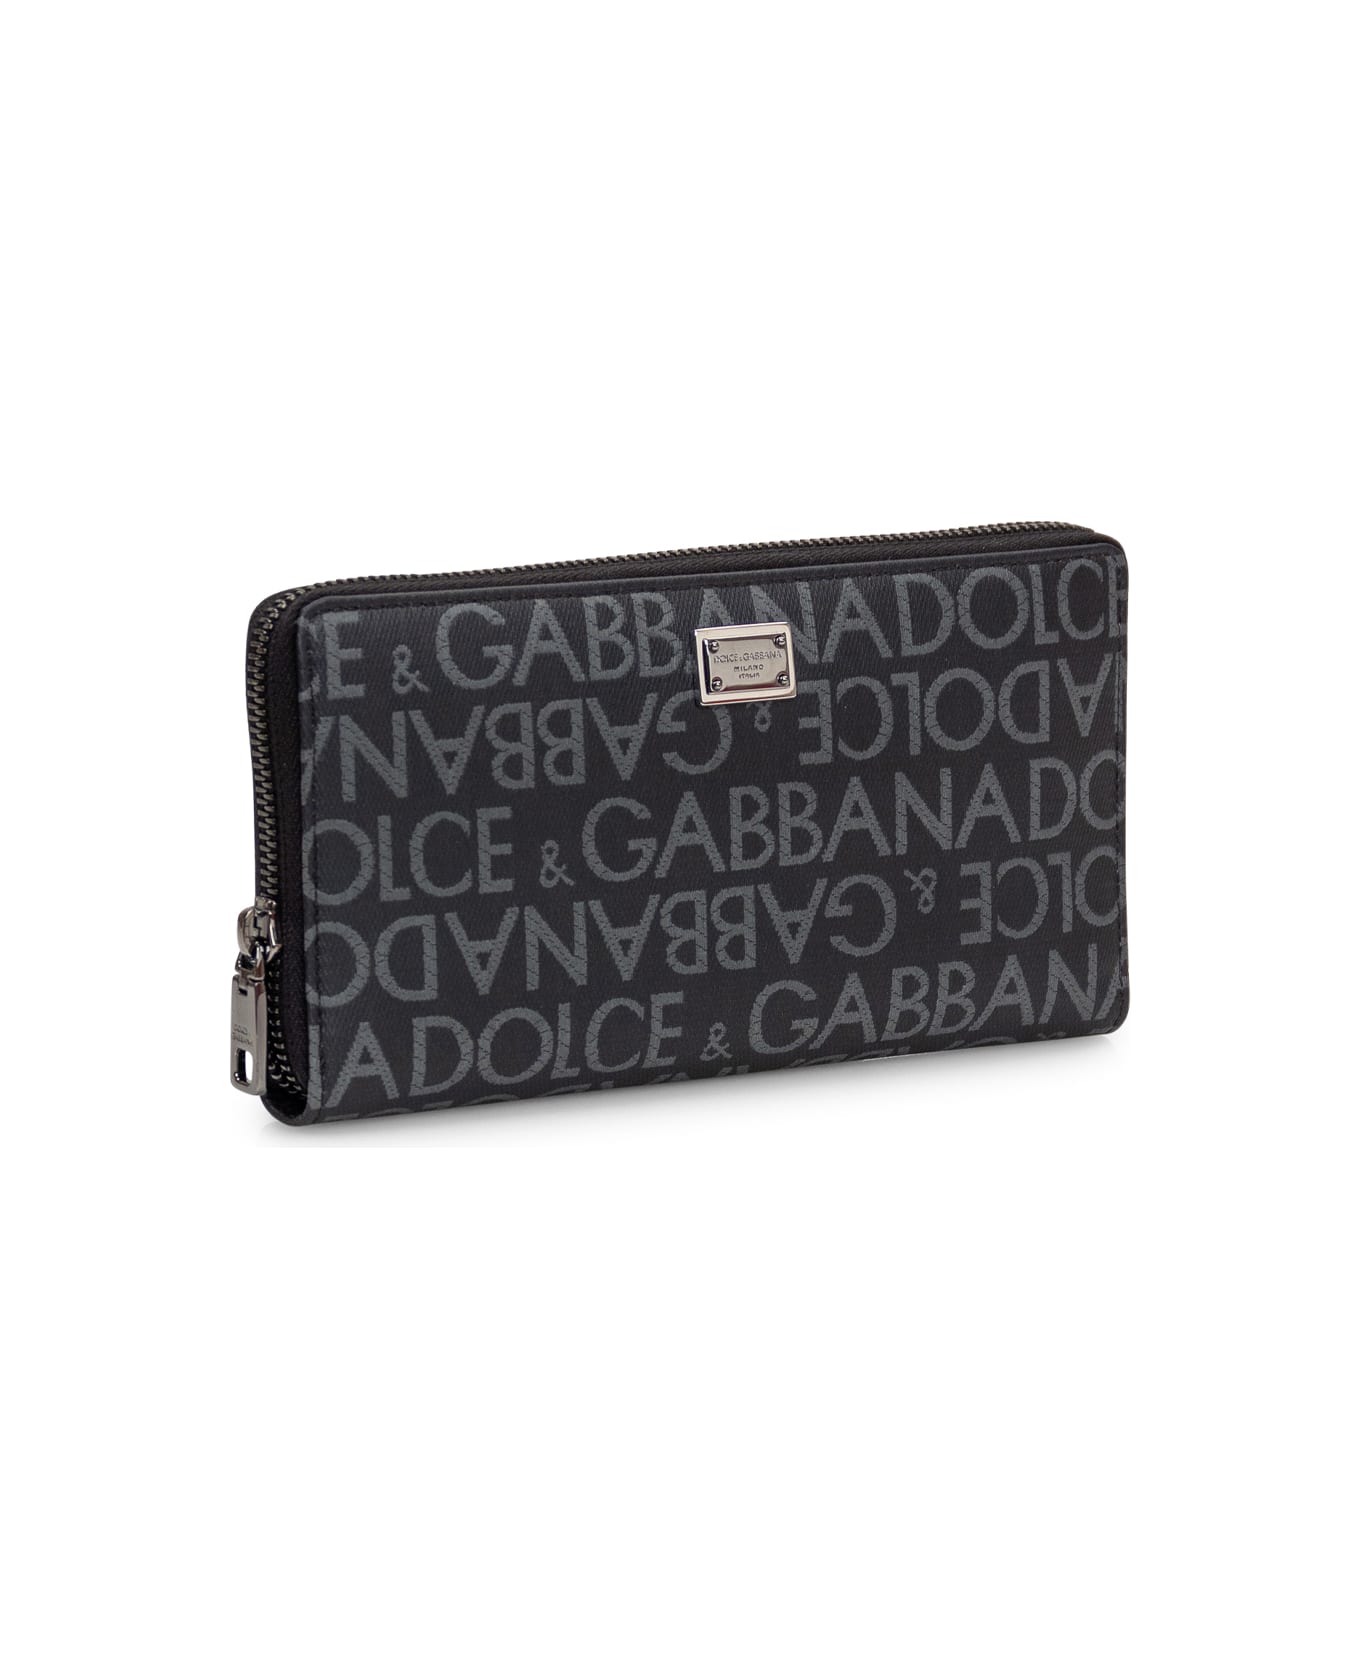 Dolce & Gabbana All-over Monogrammed Wallet - Black / Grey 財布